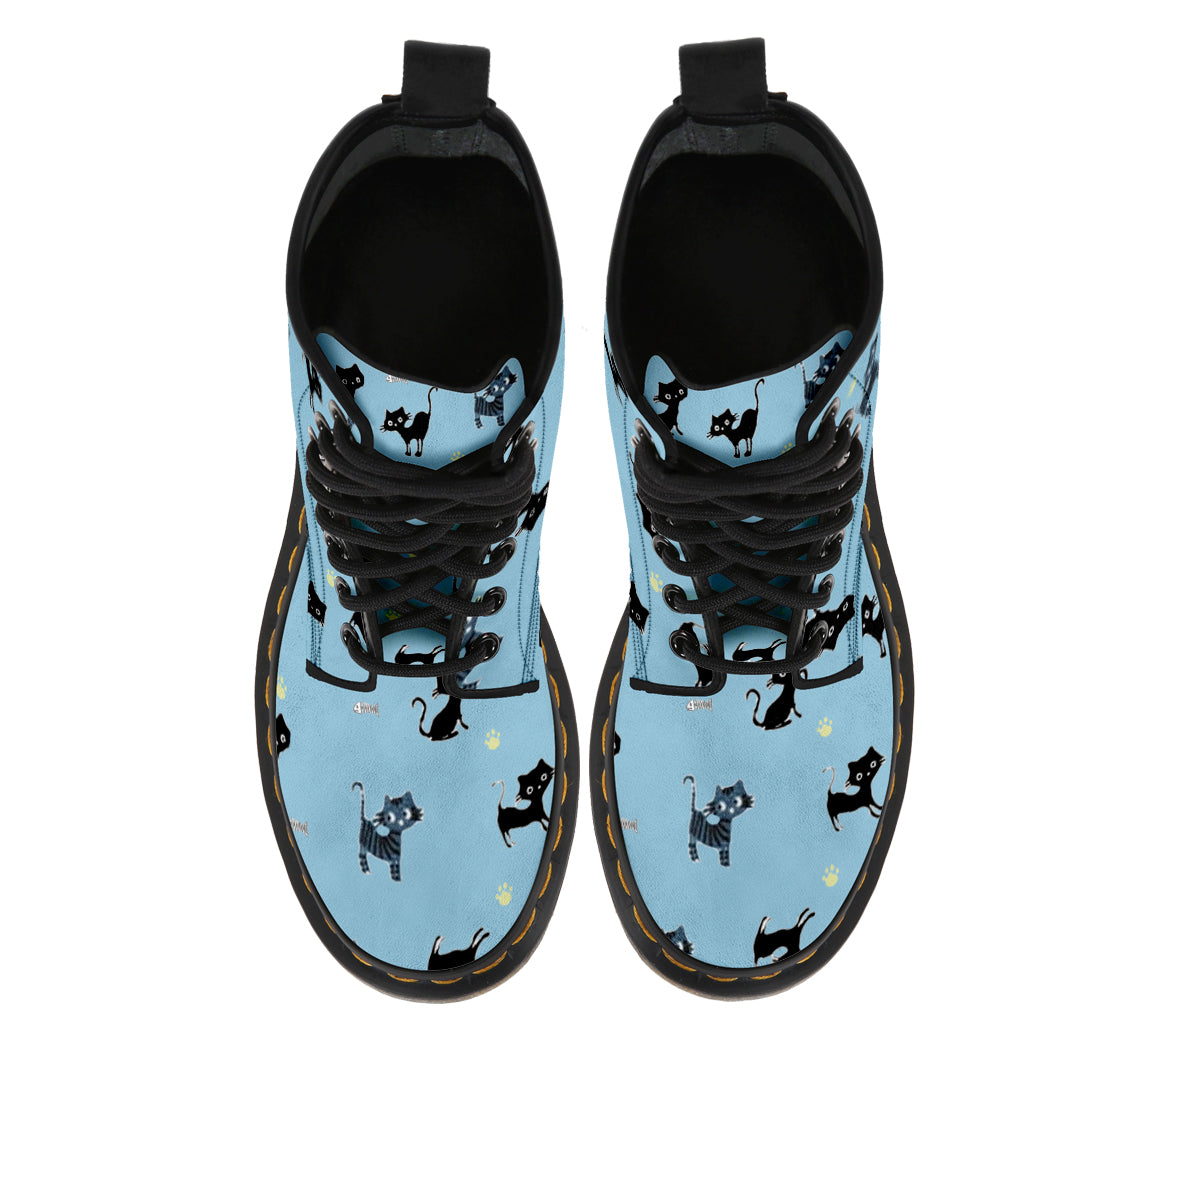 Blue Cute Cats Boots (Women's) - Hello Moa